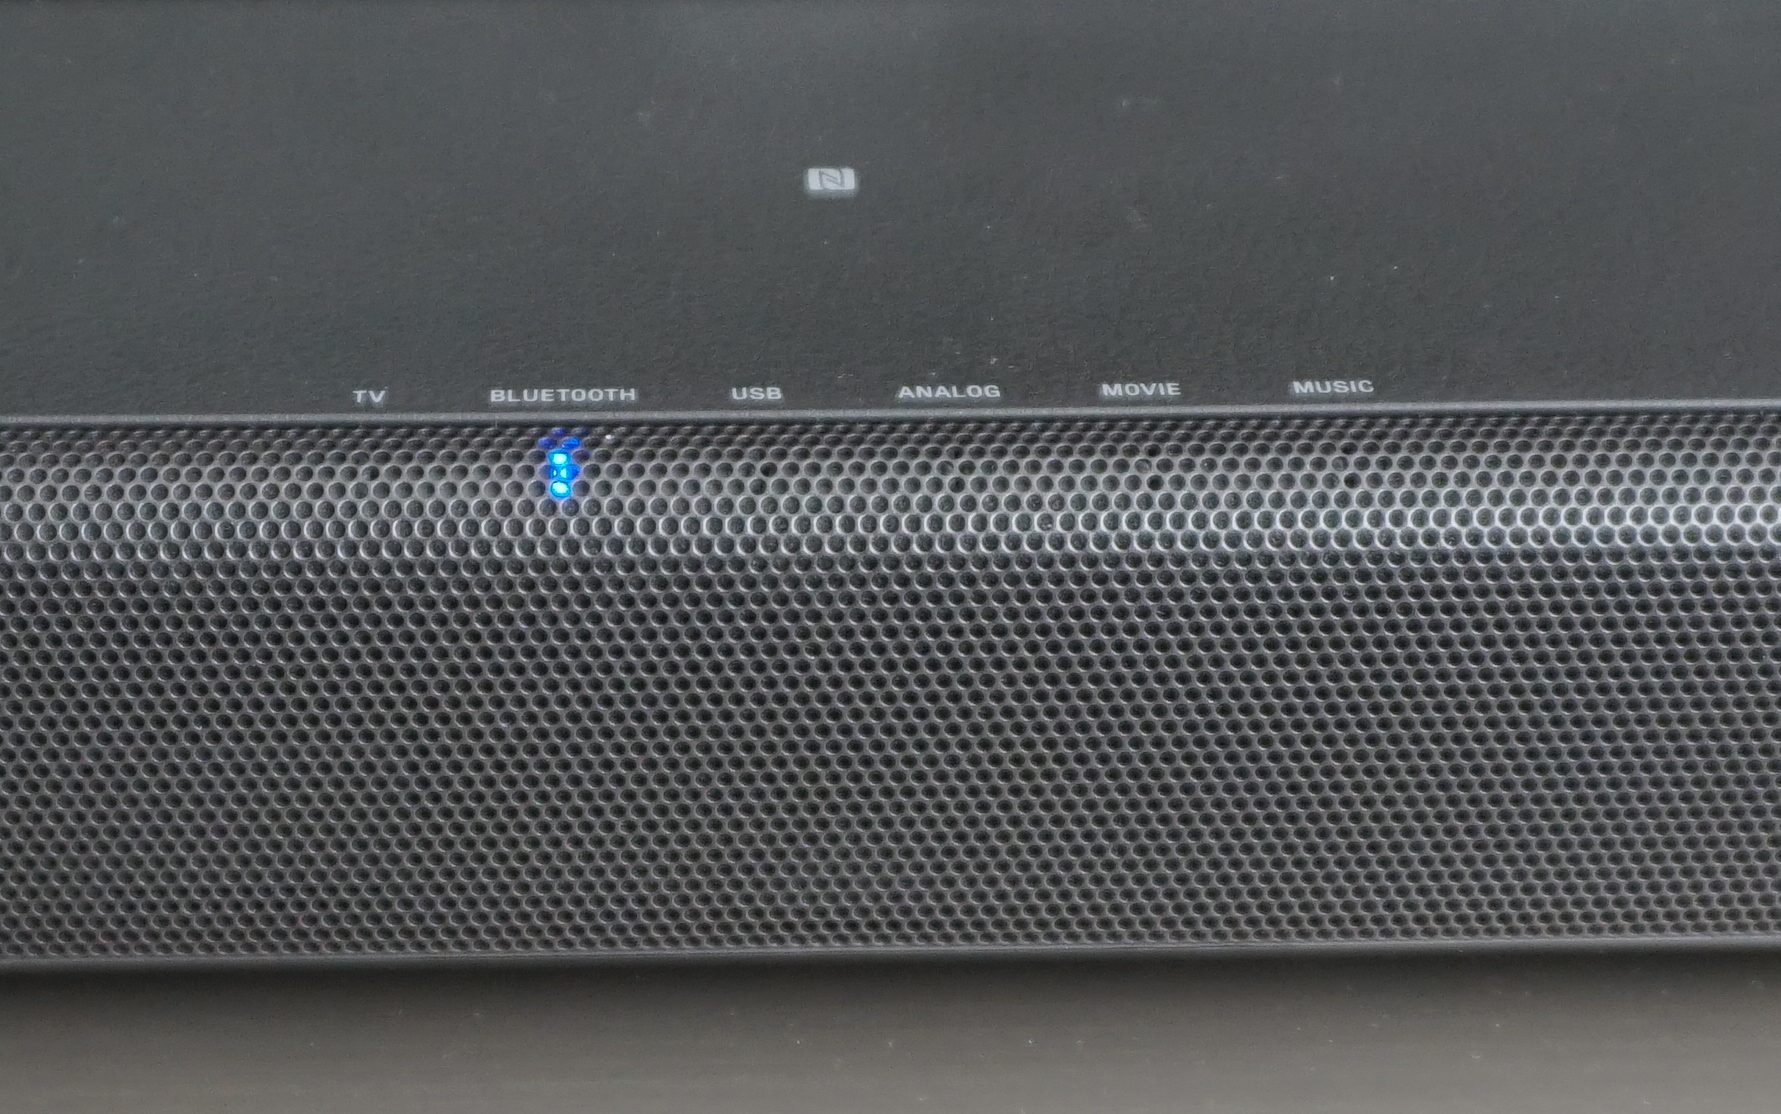 Sony HT-MT300 Compact Soundbar Review | Best Buy Blog